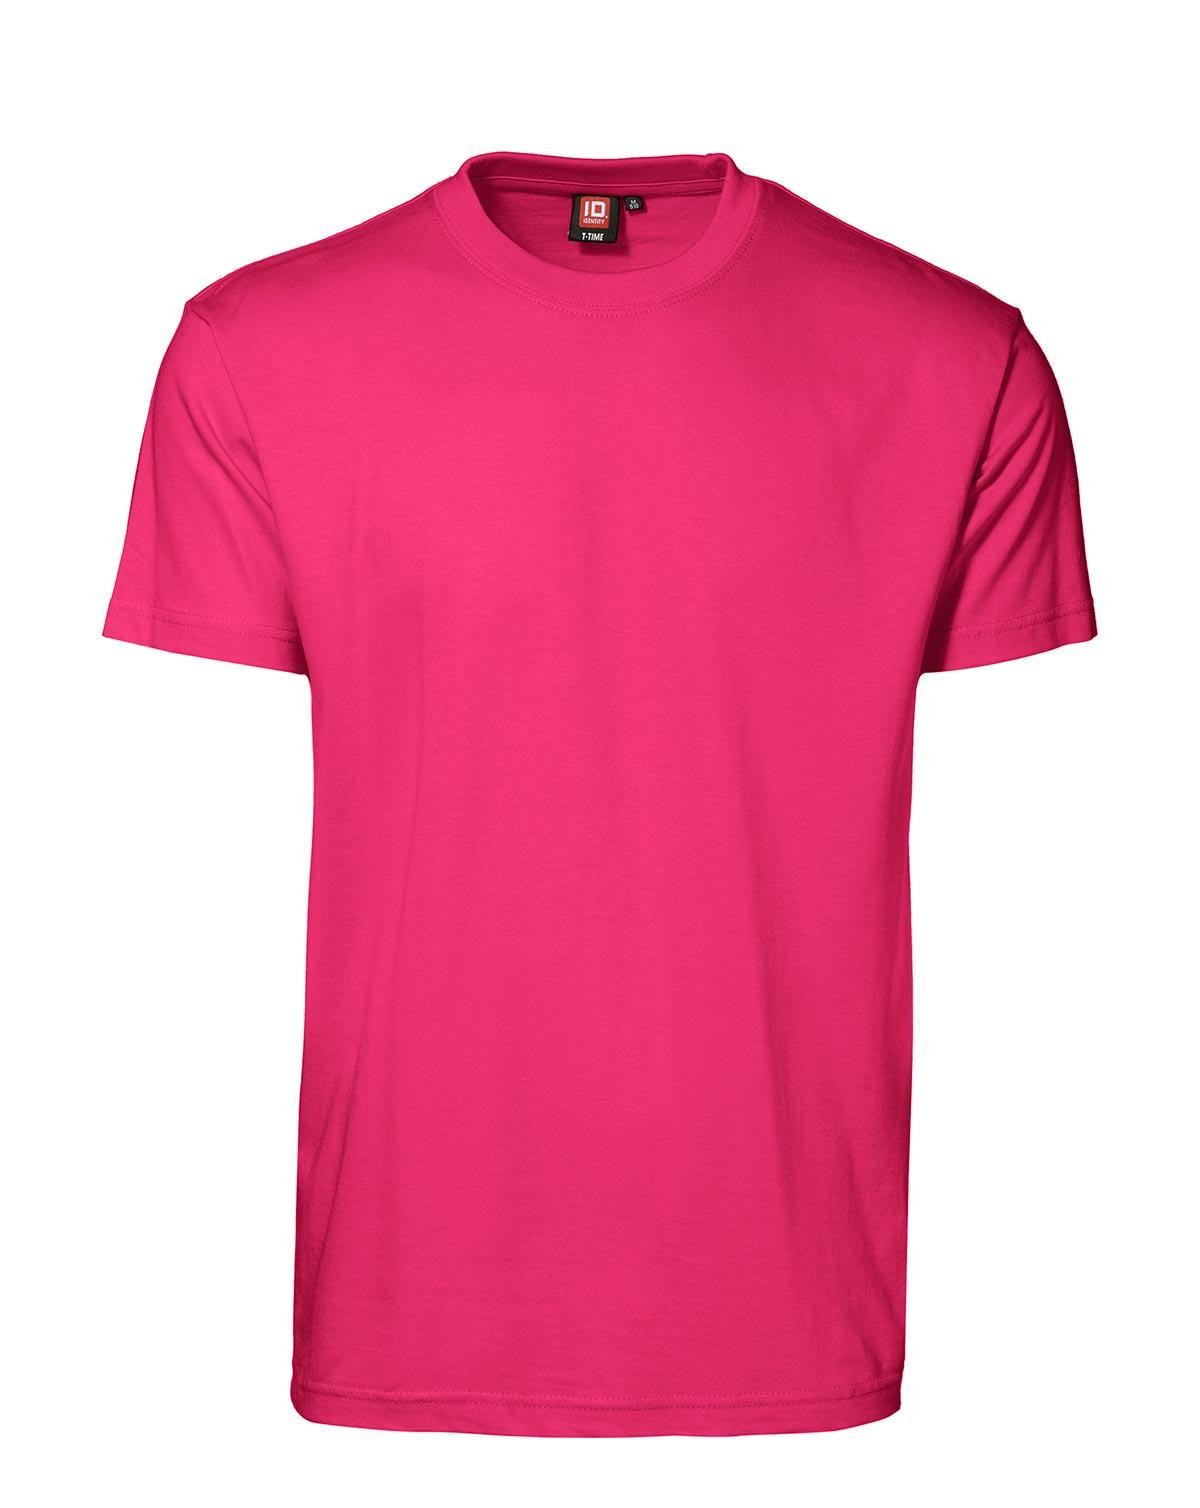 Billede af ID T-Time T-shirt, rund hals (Pink, L) hos Army Star